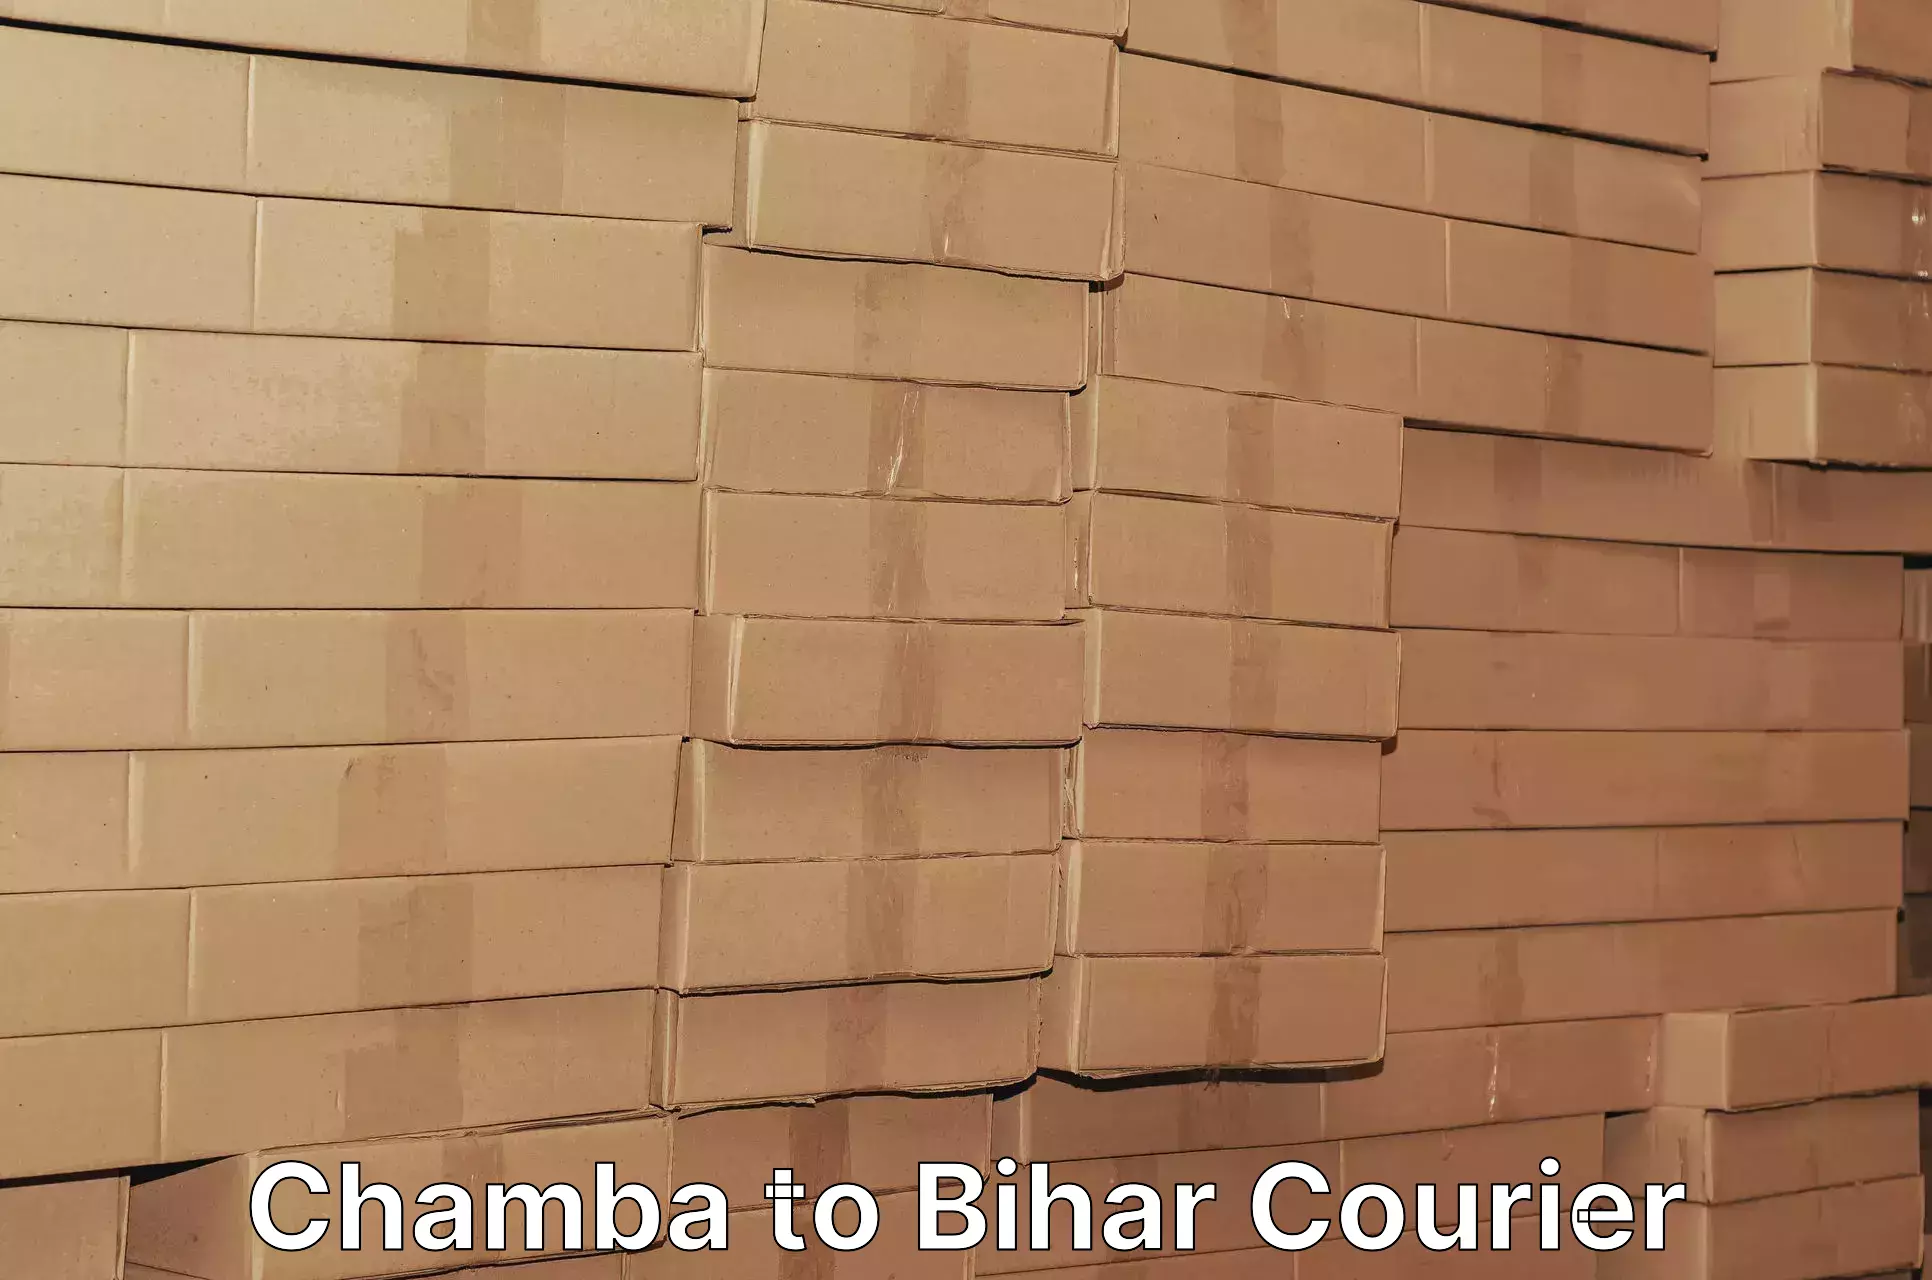 Courier service comparison Chamba to Bihar